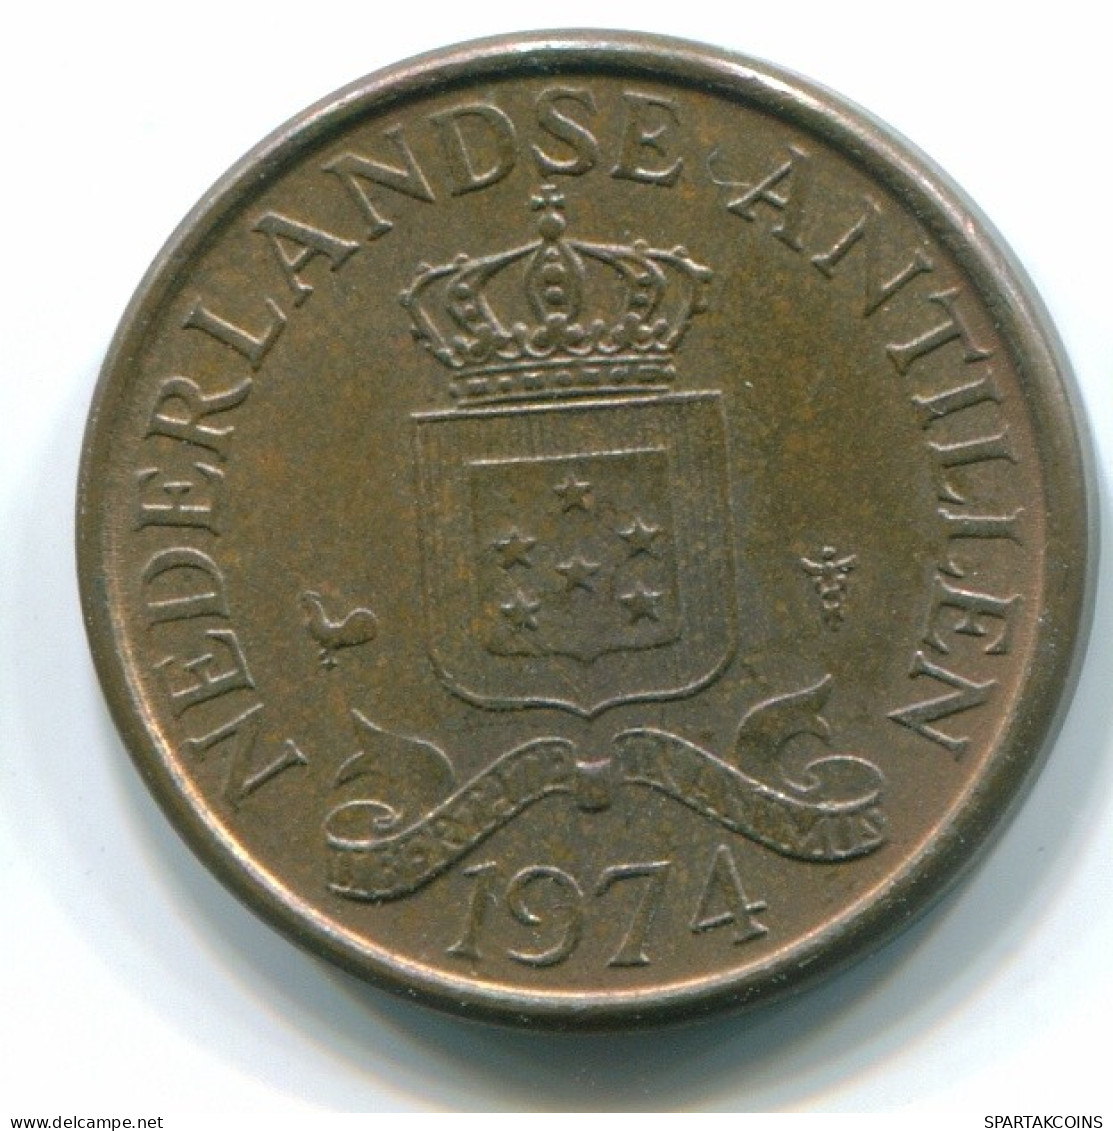 1 CENT 1974 NETHERLANDS ANTILLES Bronze Colonial Coin #S10656.U.A - Niederländische Antillen